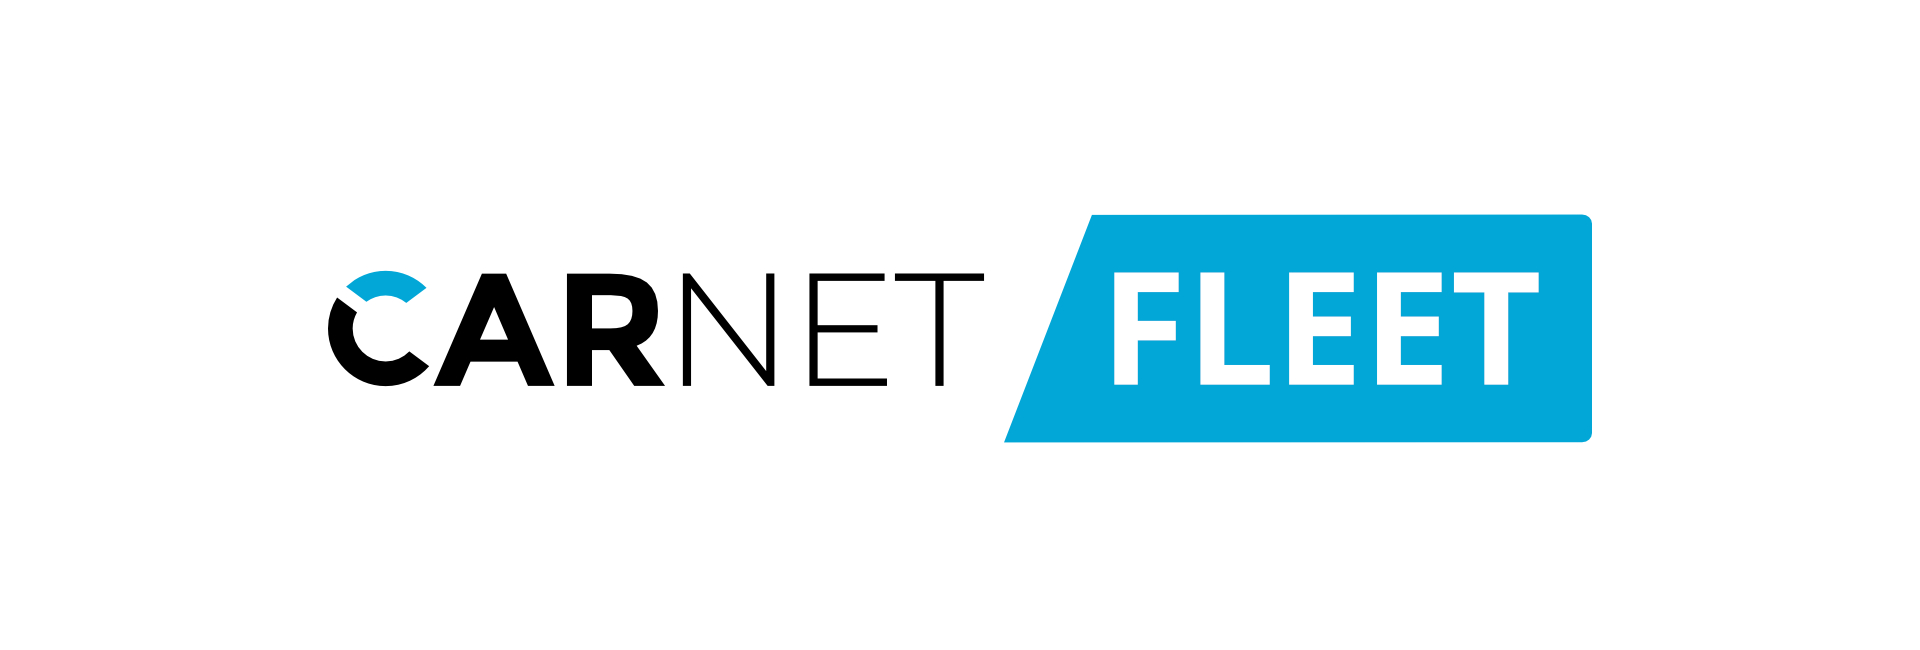 carnetfleet-logo